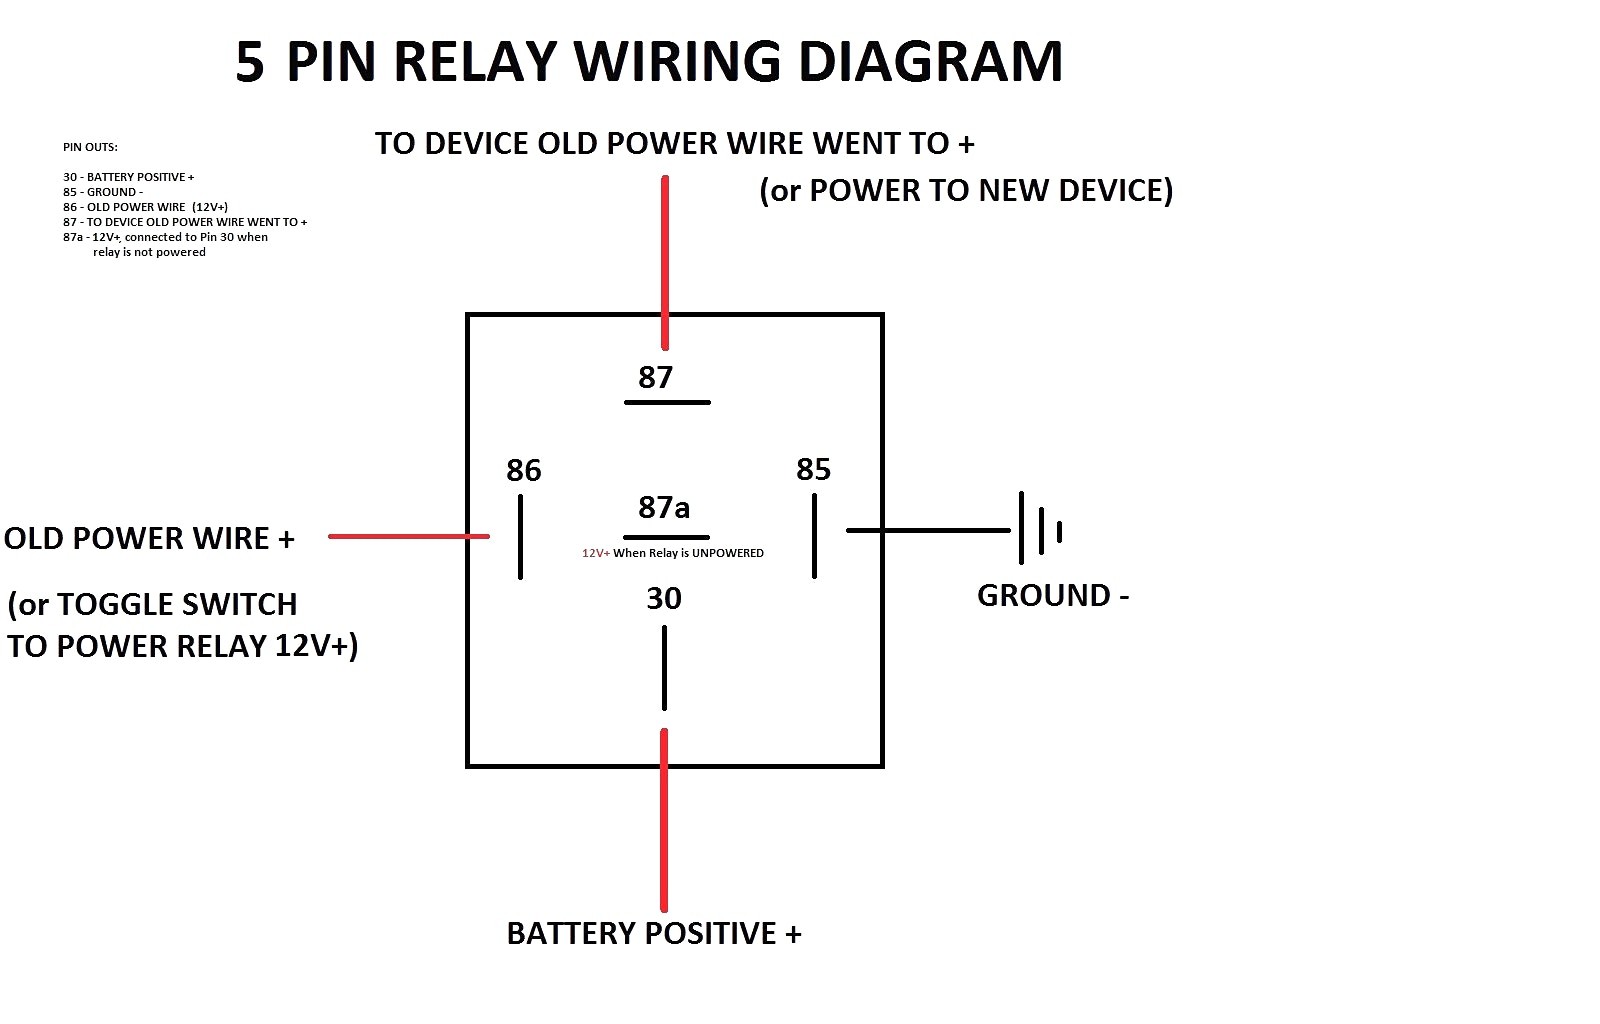 5 Pin Relay Wiring Diagram Carlplant Endearing Enchanting 4 For 2 Flasher